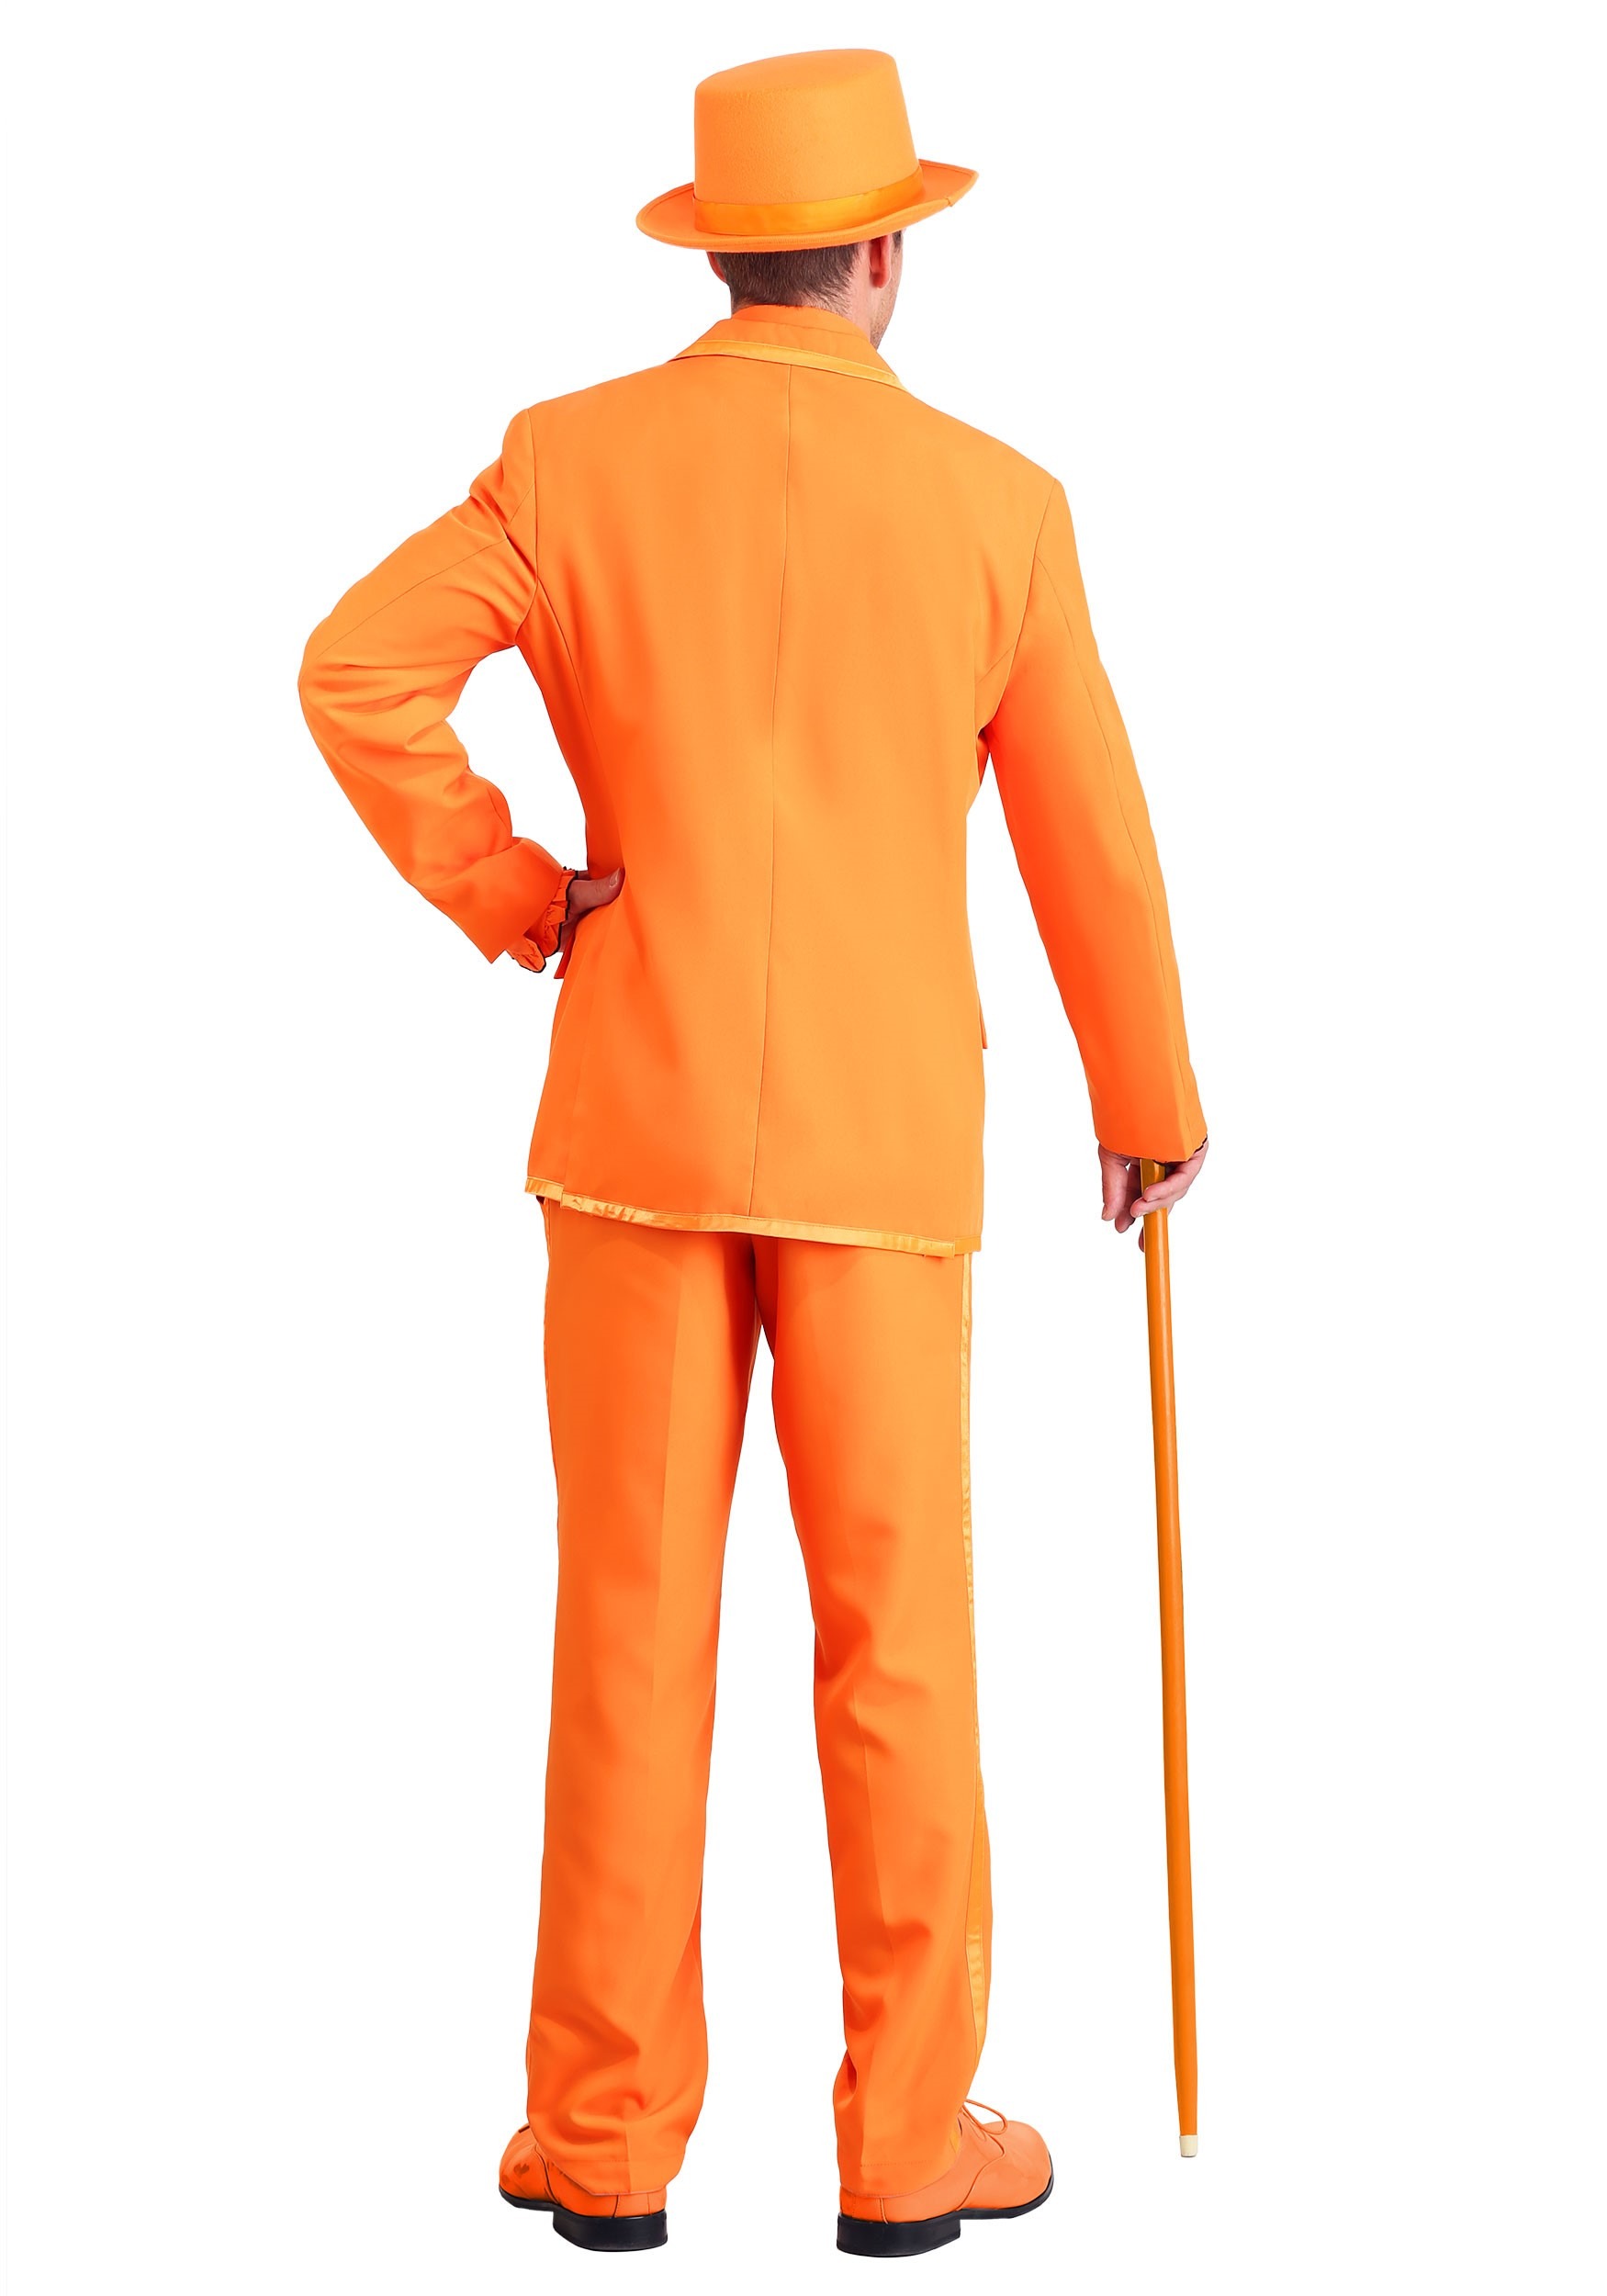 Plus Size Orange Tuxedo Fancy Dress Costume For Men